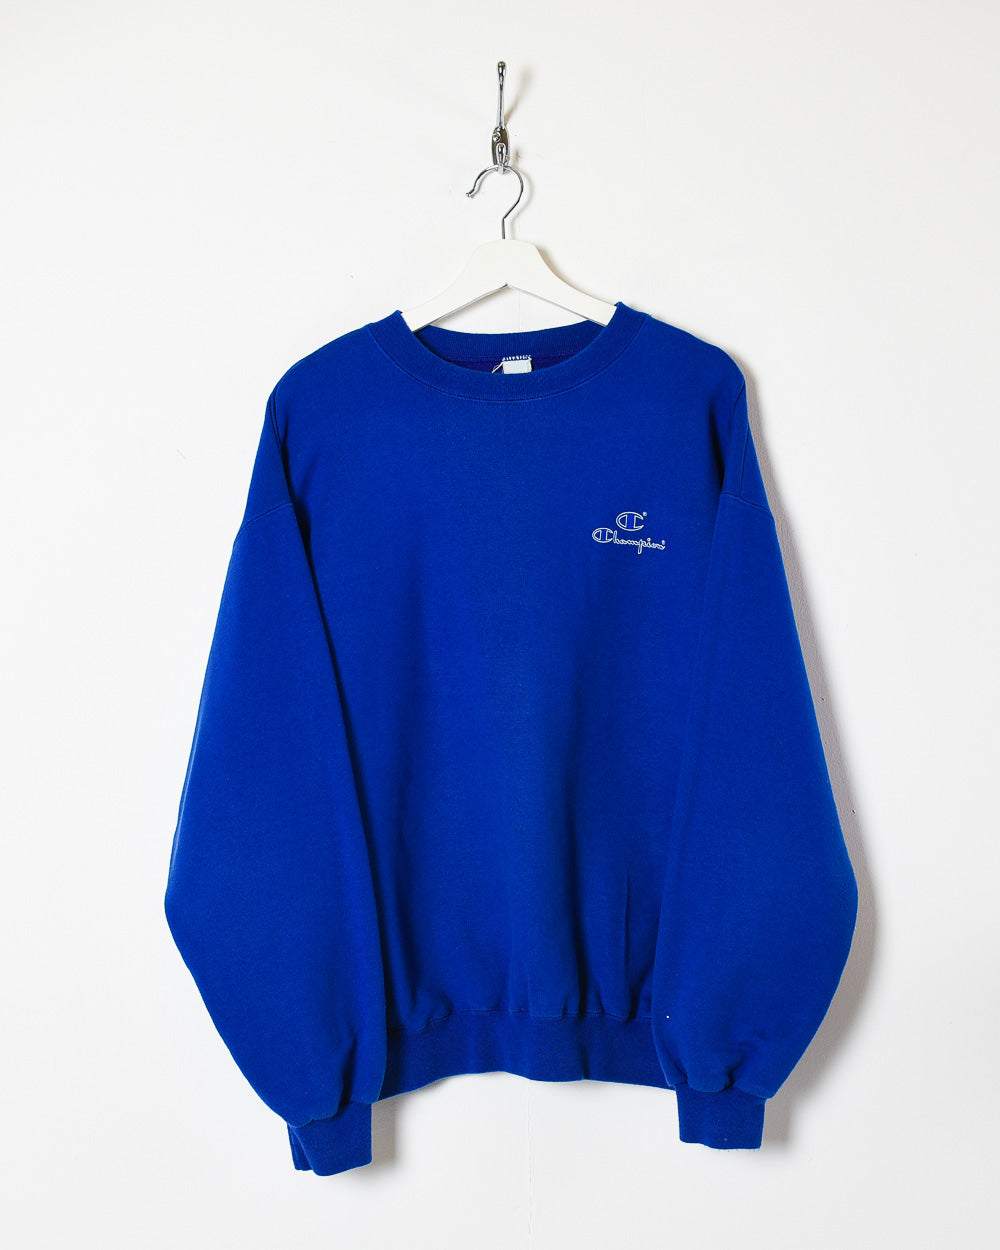 Blue Champion Sweatshirt - Large